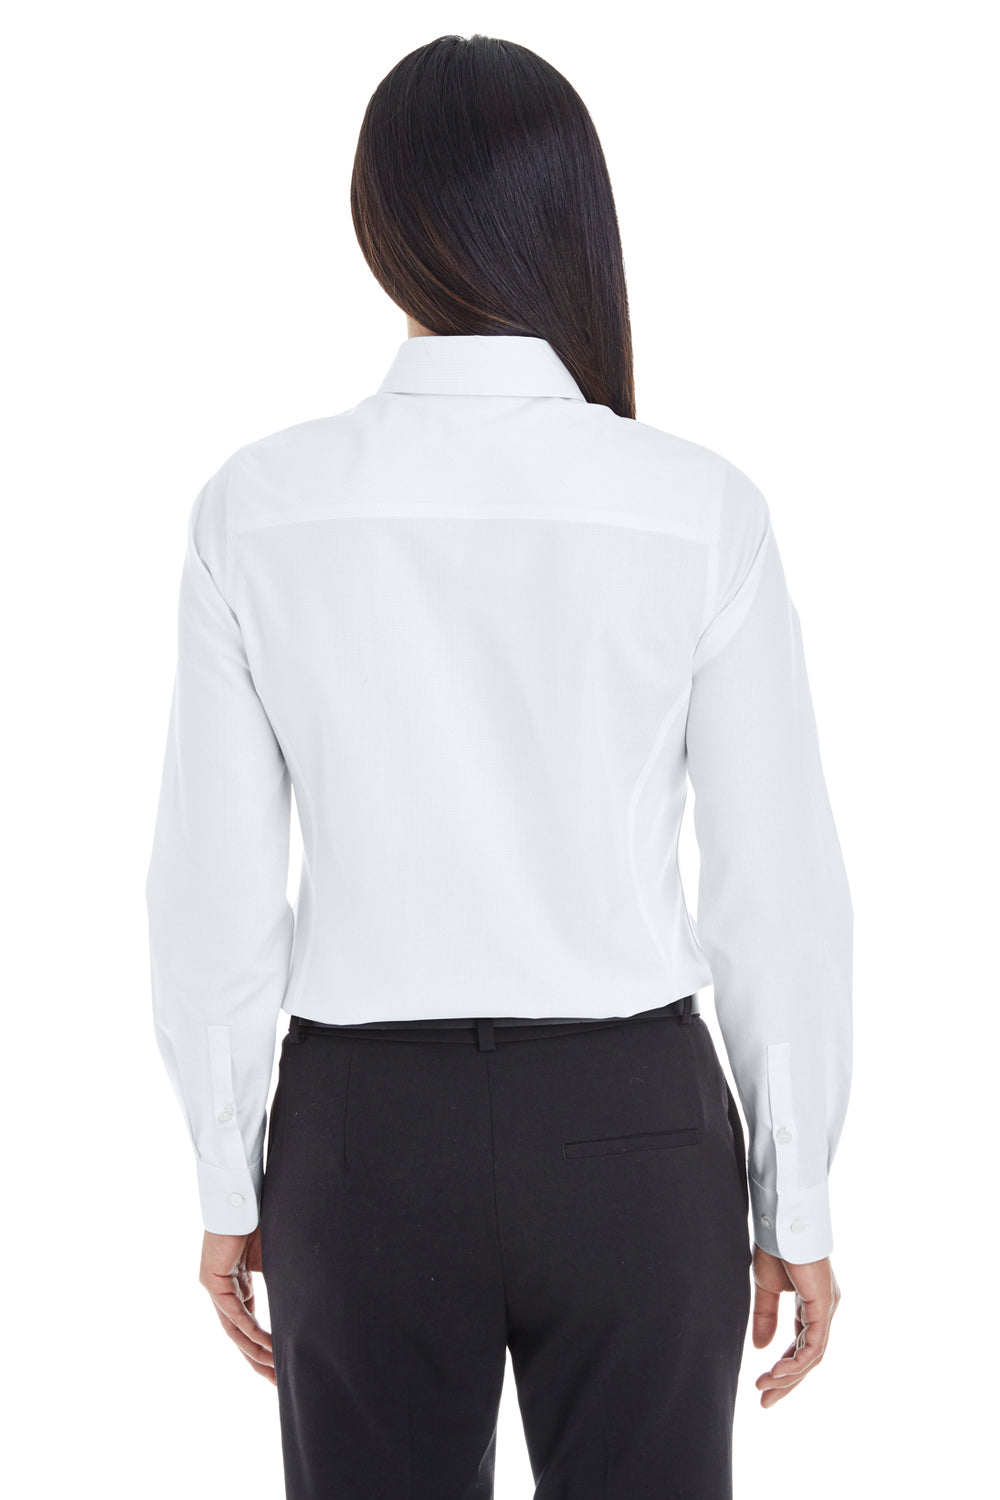 Devon & Jones DG532W Womens Crown Woven Collection Wrinkle Resistant Long Sleeve Button Down Shirt White Back